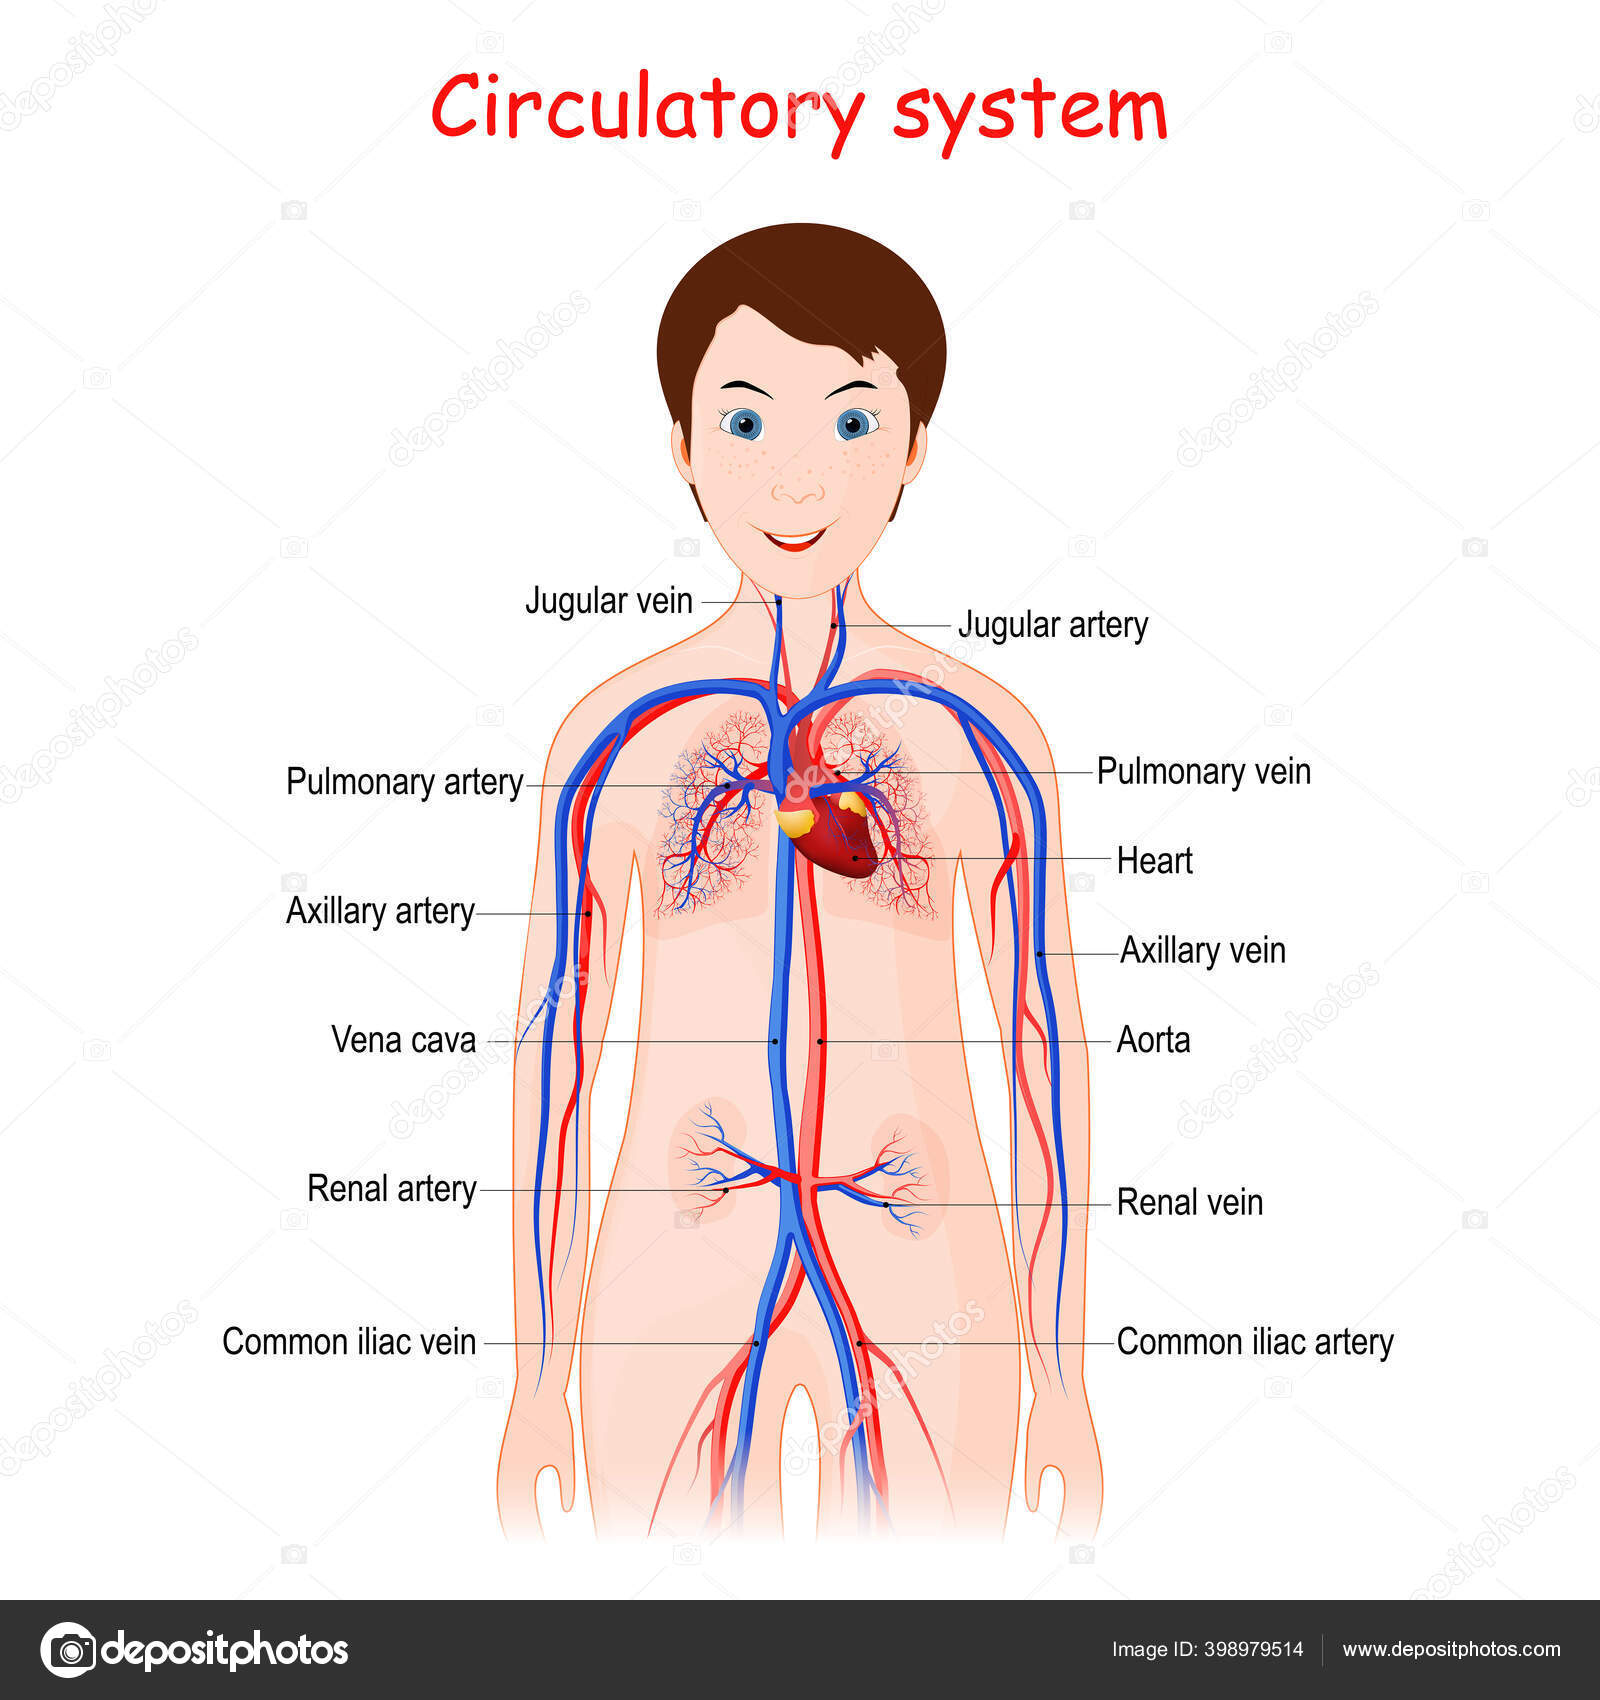 human circulatory system diagram labeled basic